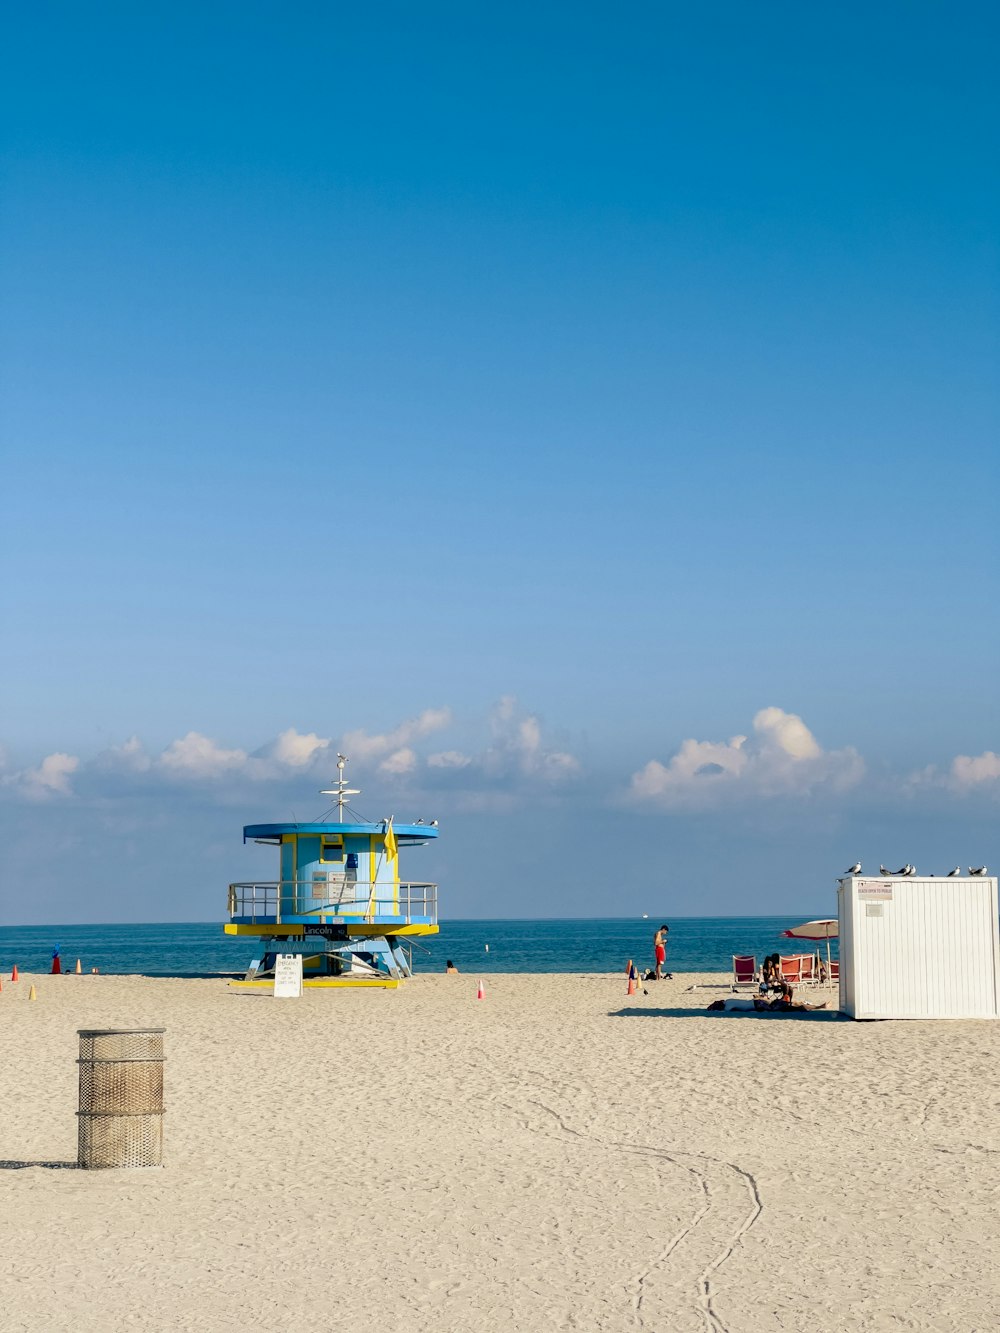 a lifeguard station on a beach with a blue sky